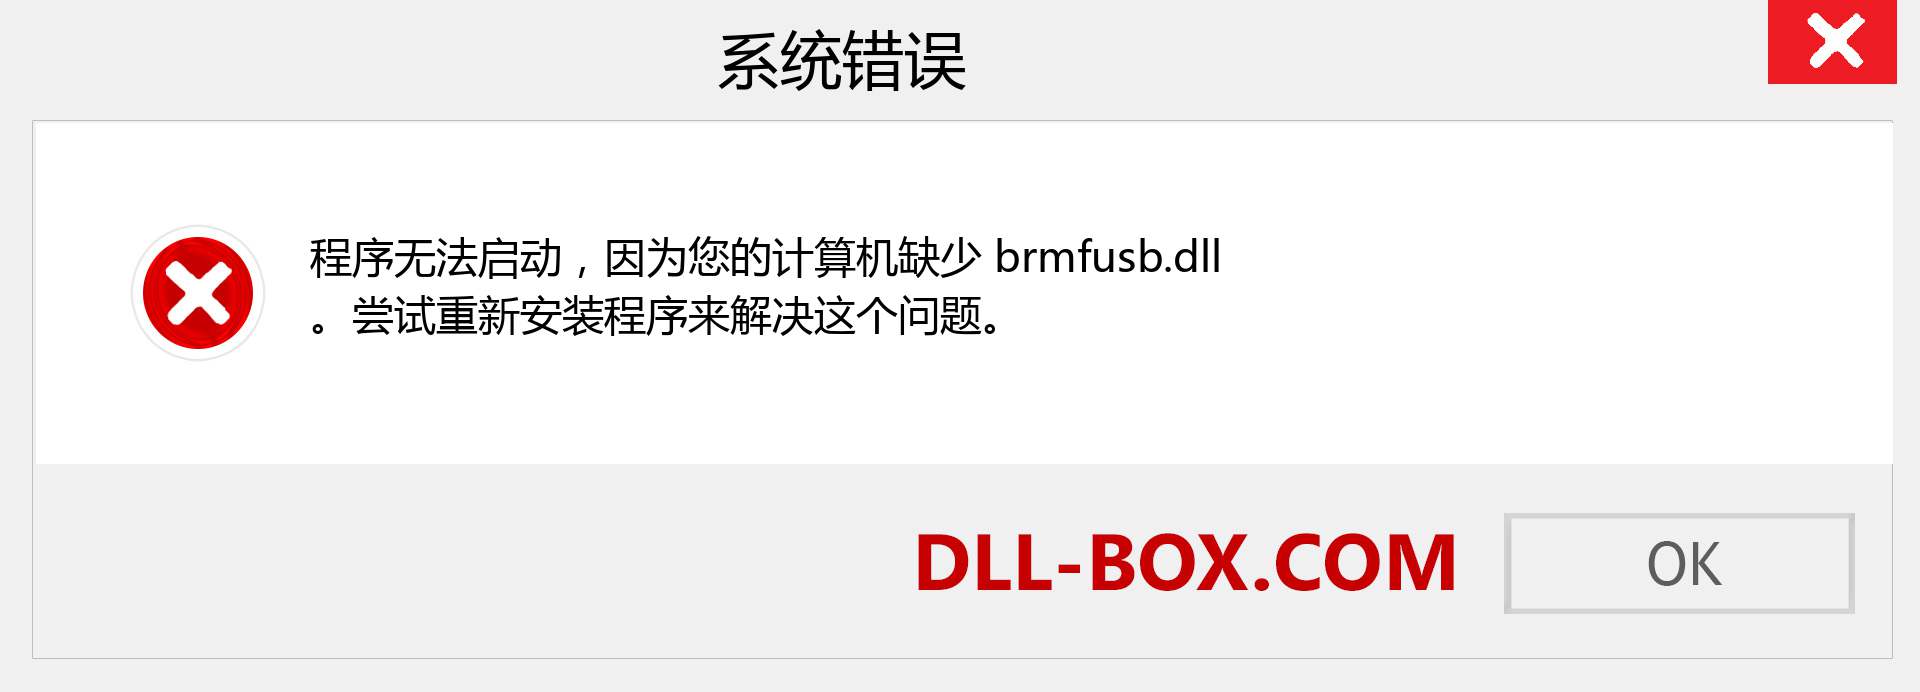 brmfusb.dll 文件丢失？。 适用于 Windows 7、8、10 的下载 - 修复 Windows、照片、图像上的 brmfusb dll 丢失错误